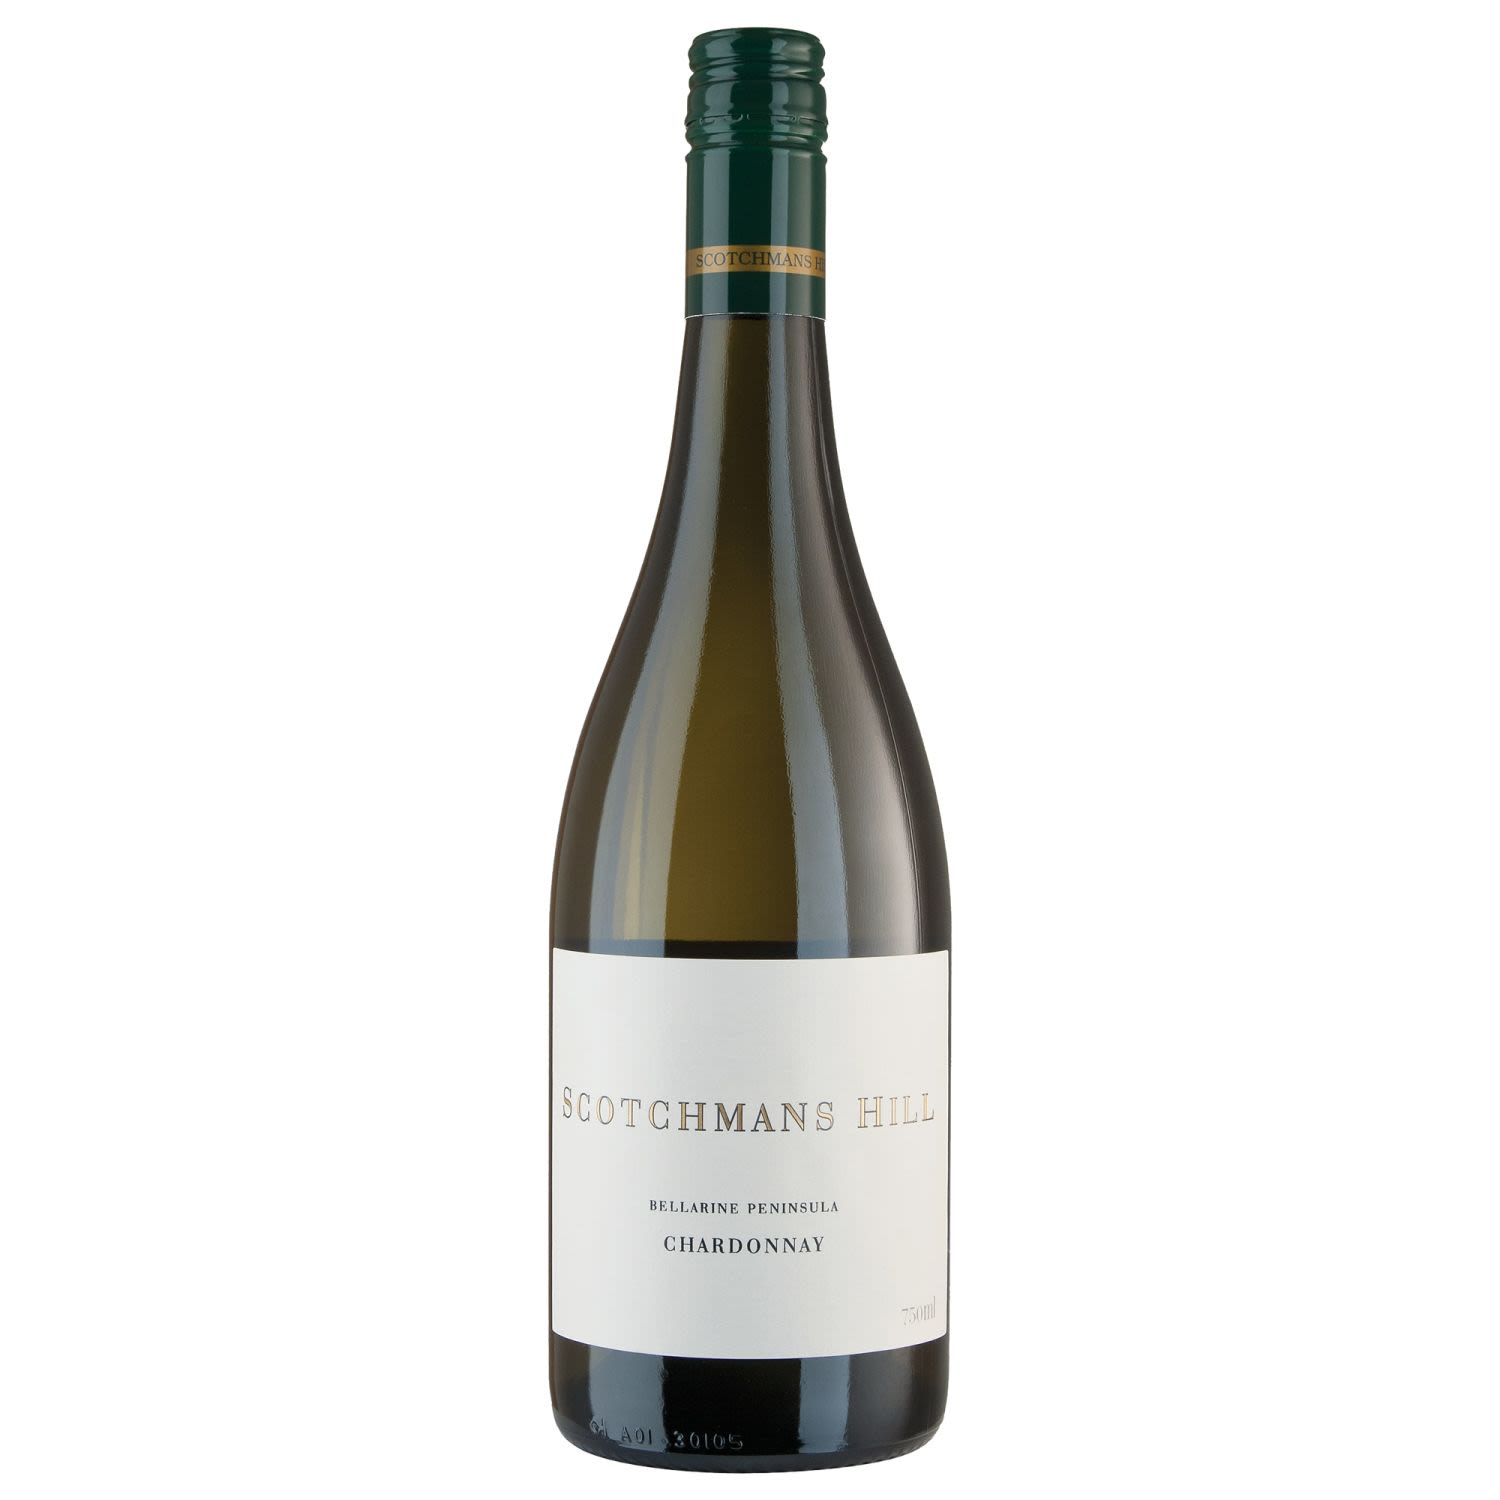 Scotchmans Hill Chardonnay 750mL Bottle